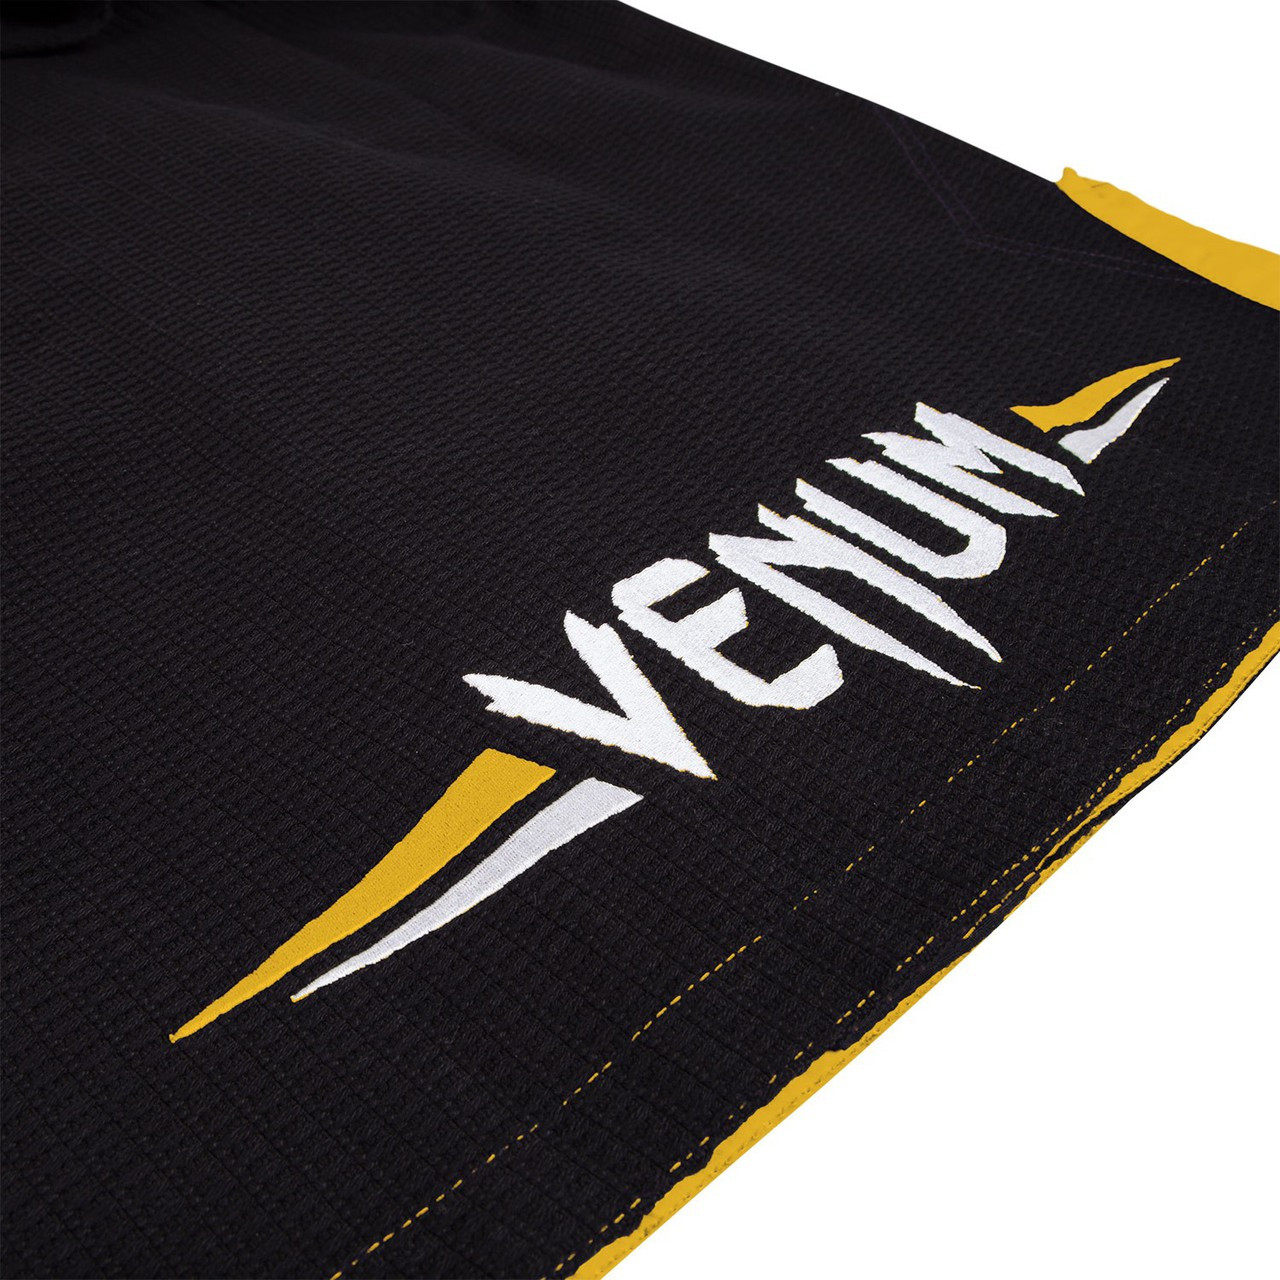 Venum Elite Gi Black and yellow bottom embroidery now available at www.thejiujitsushop.com

Enjoy free shipping from The Jiu Jitsu Shop